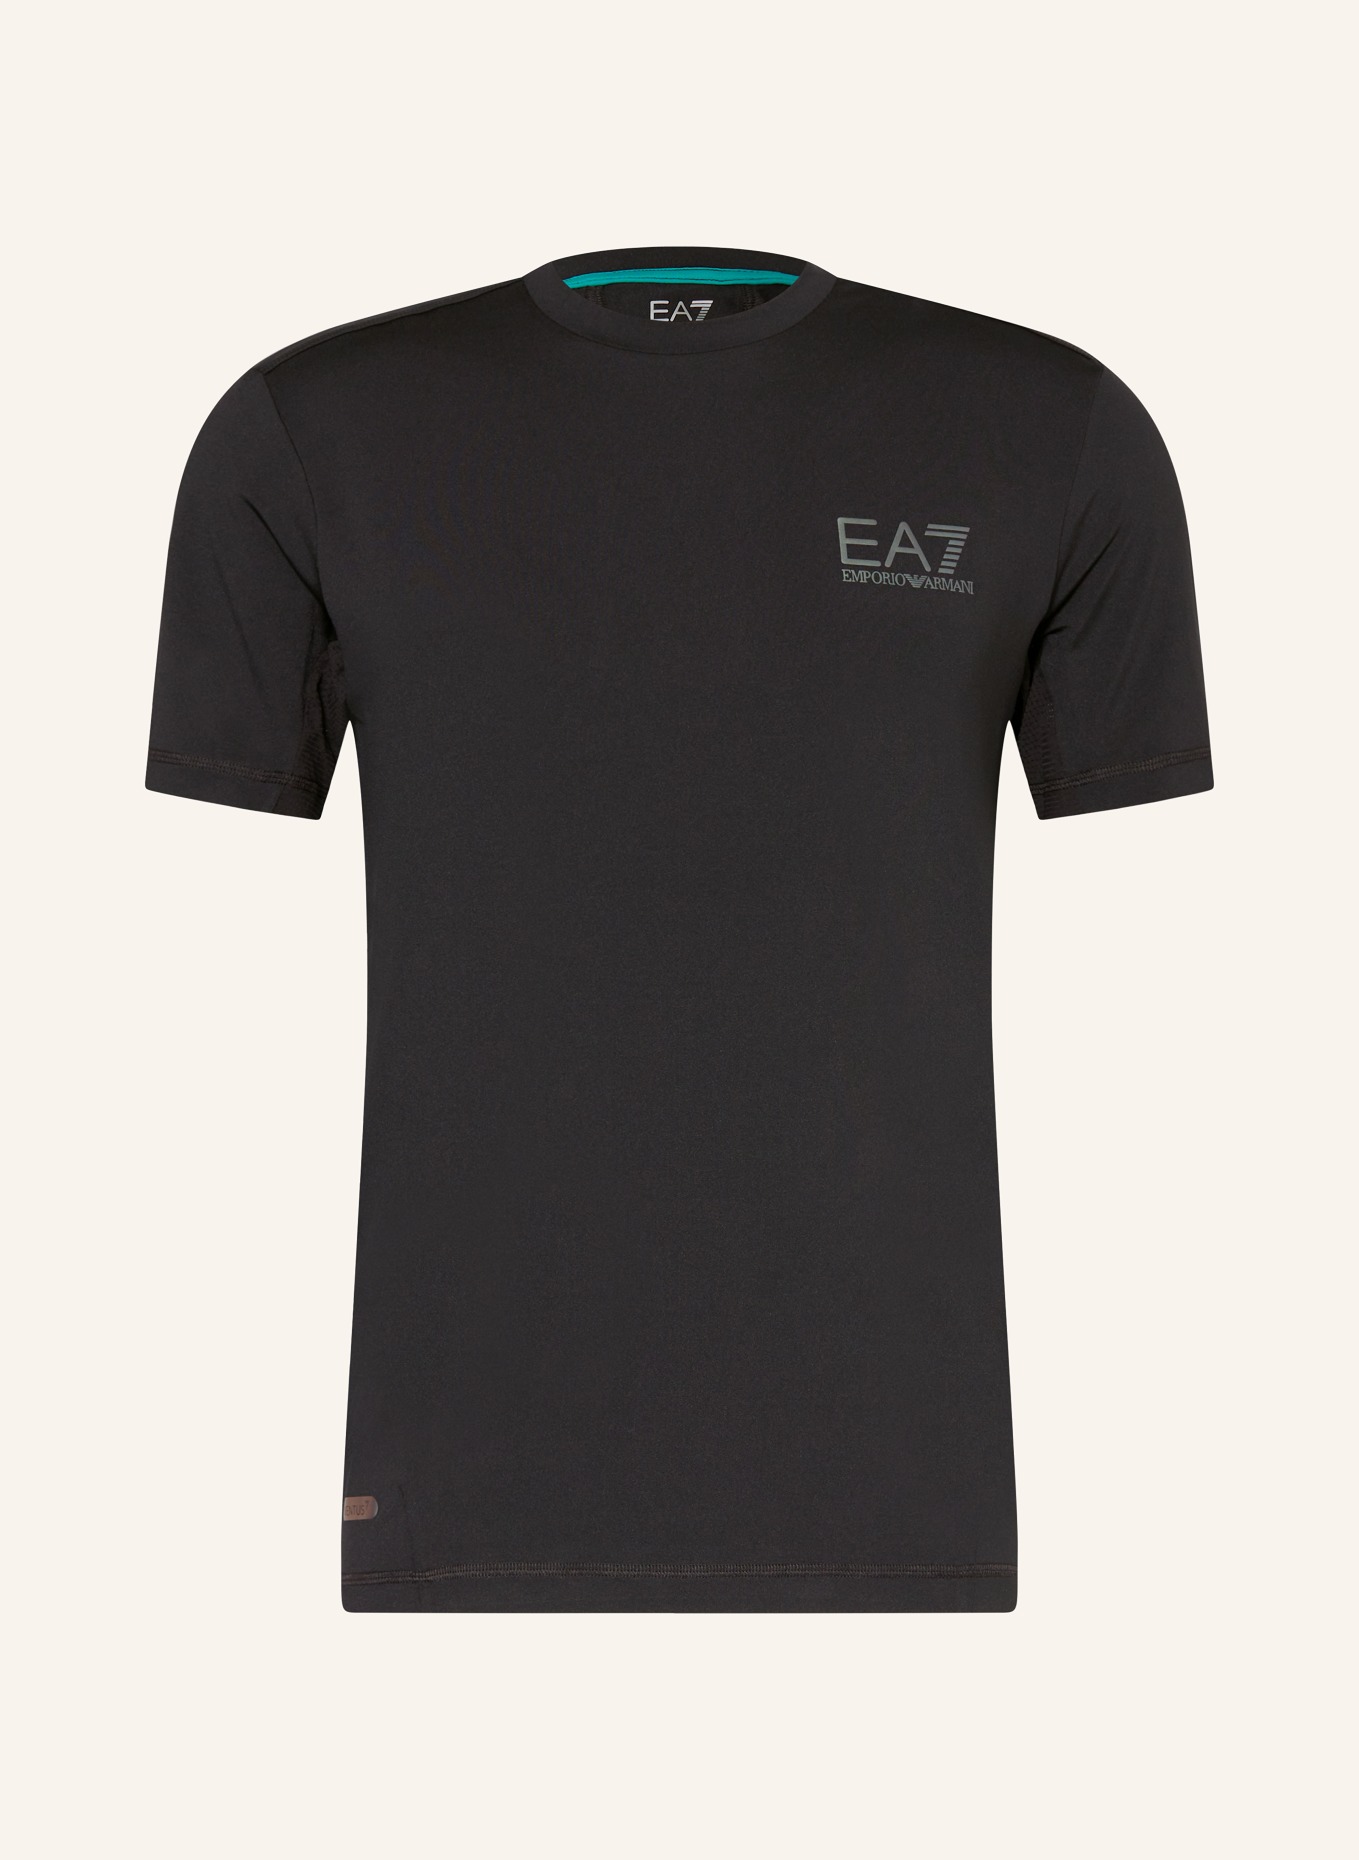 EA7 EMPORIO ARMANI T-Shirt, Farbe: SCHWARZ (Bild 1)